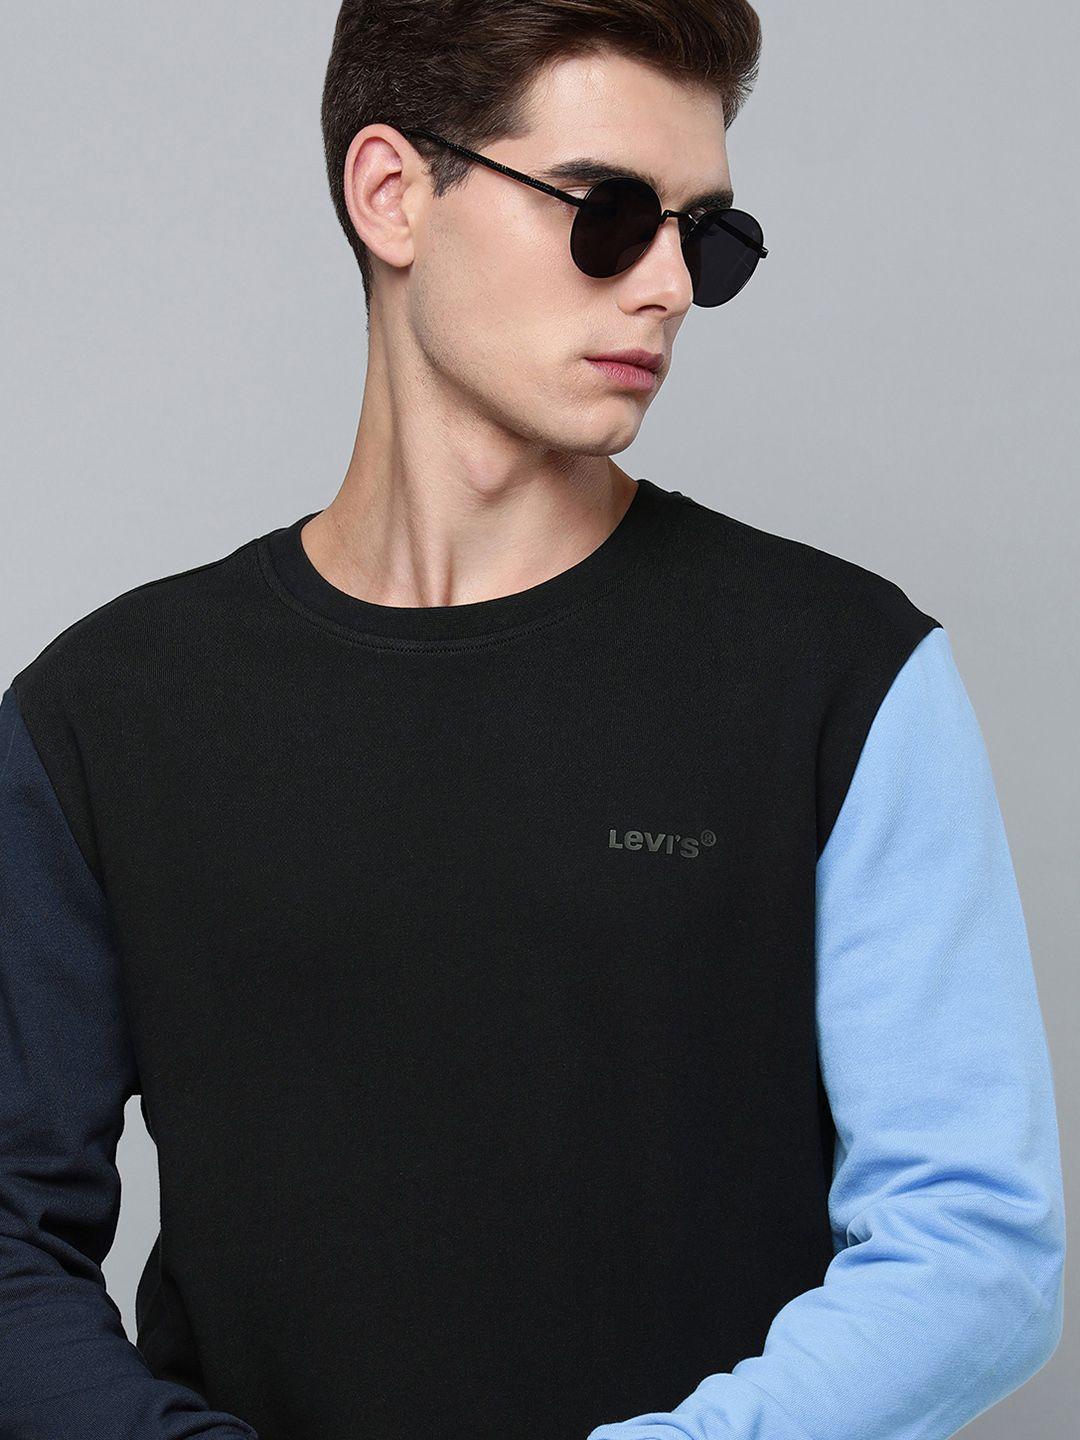 levis-men-black-colourblocked-full-sleeved-casual-sweatshirt